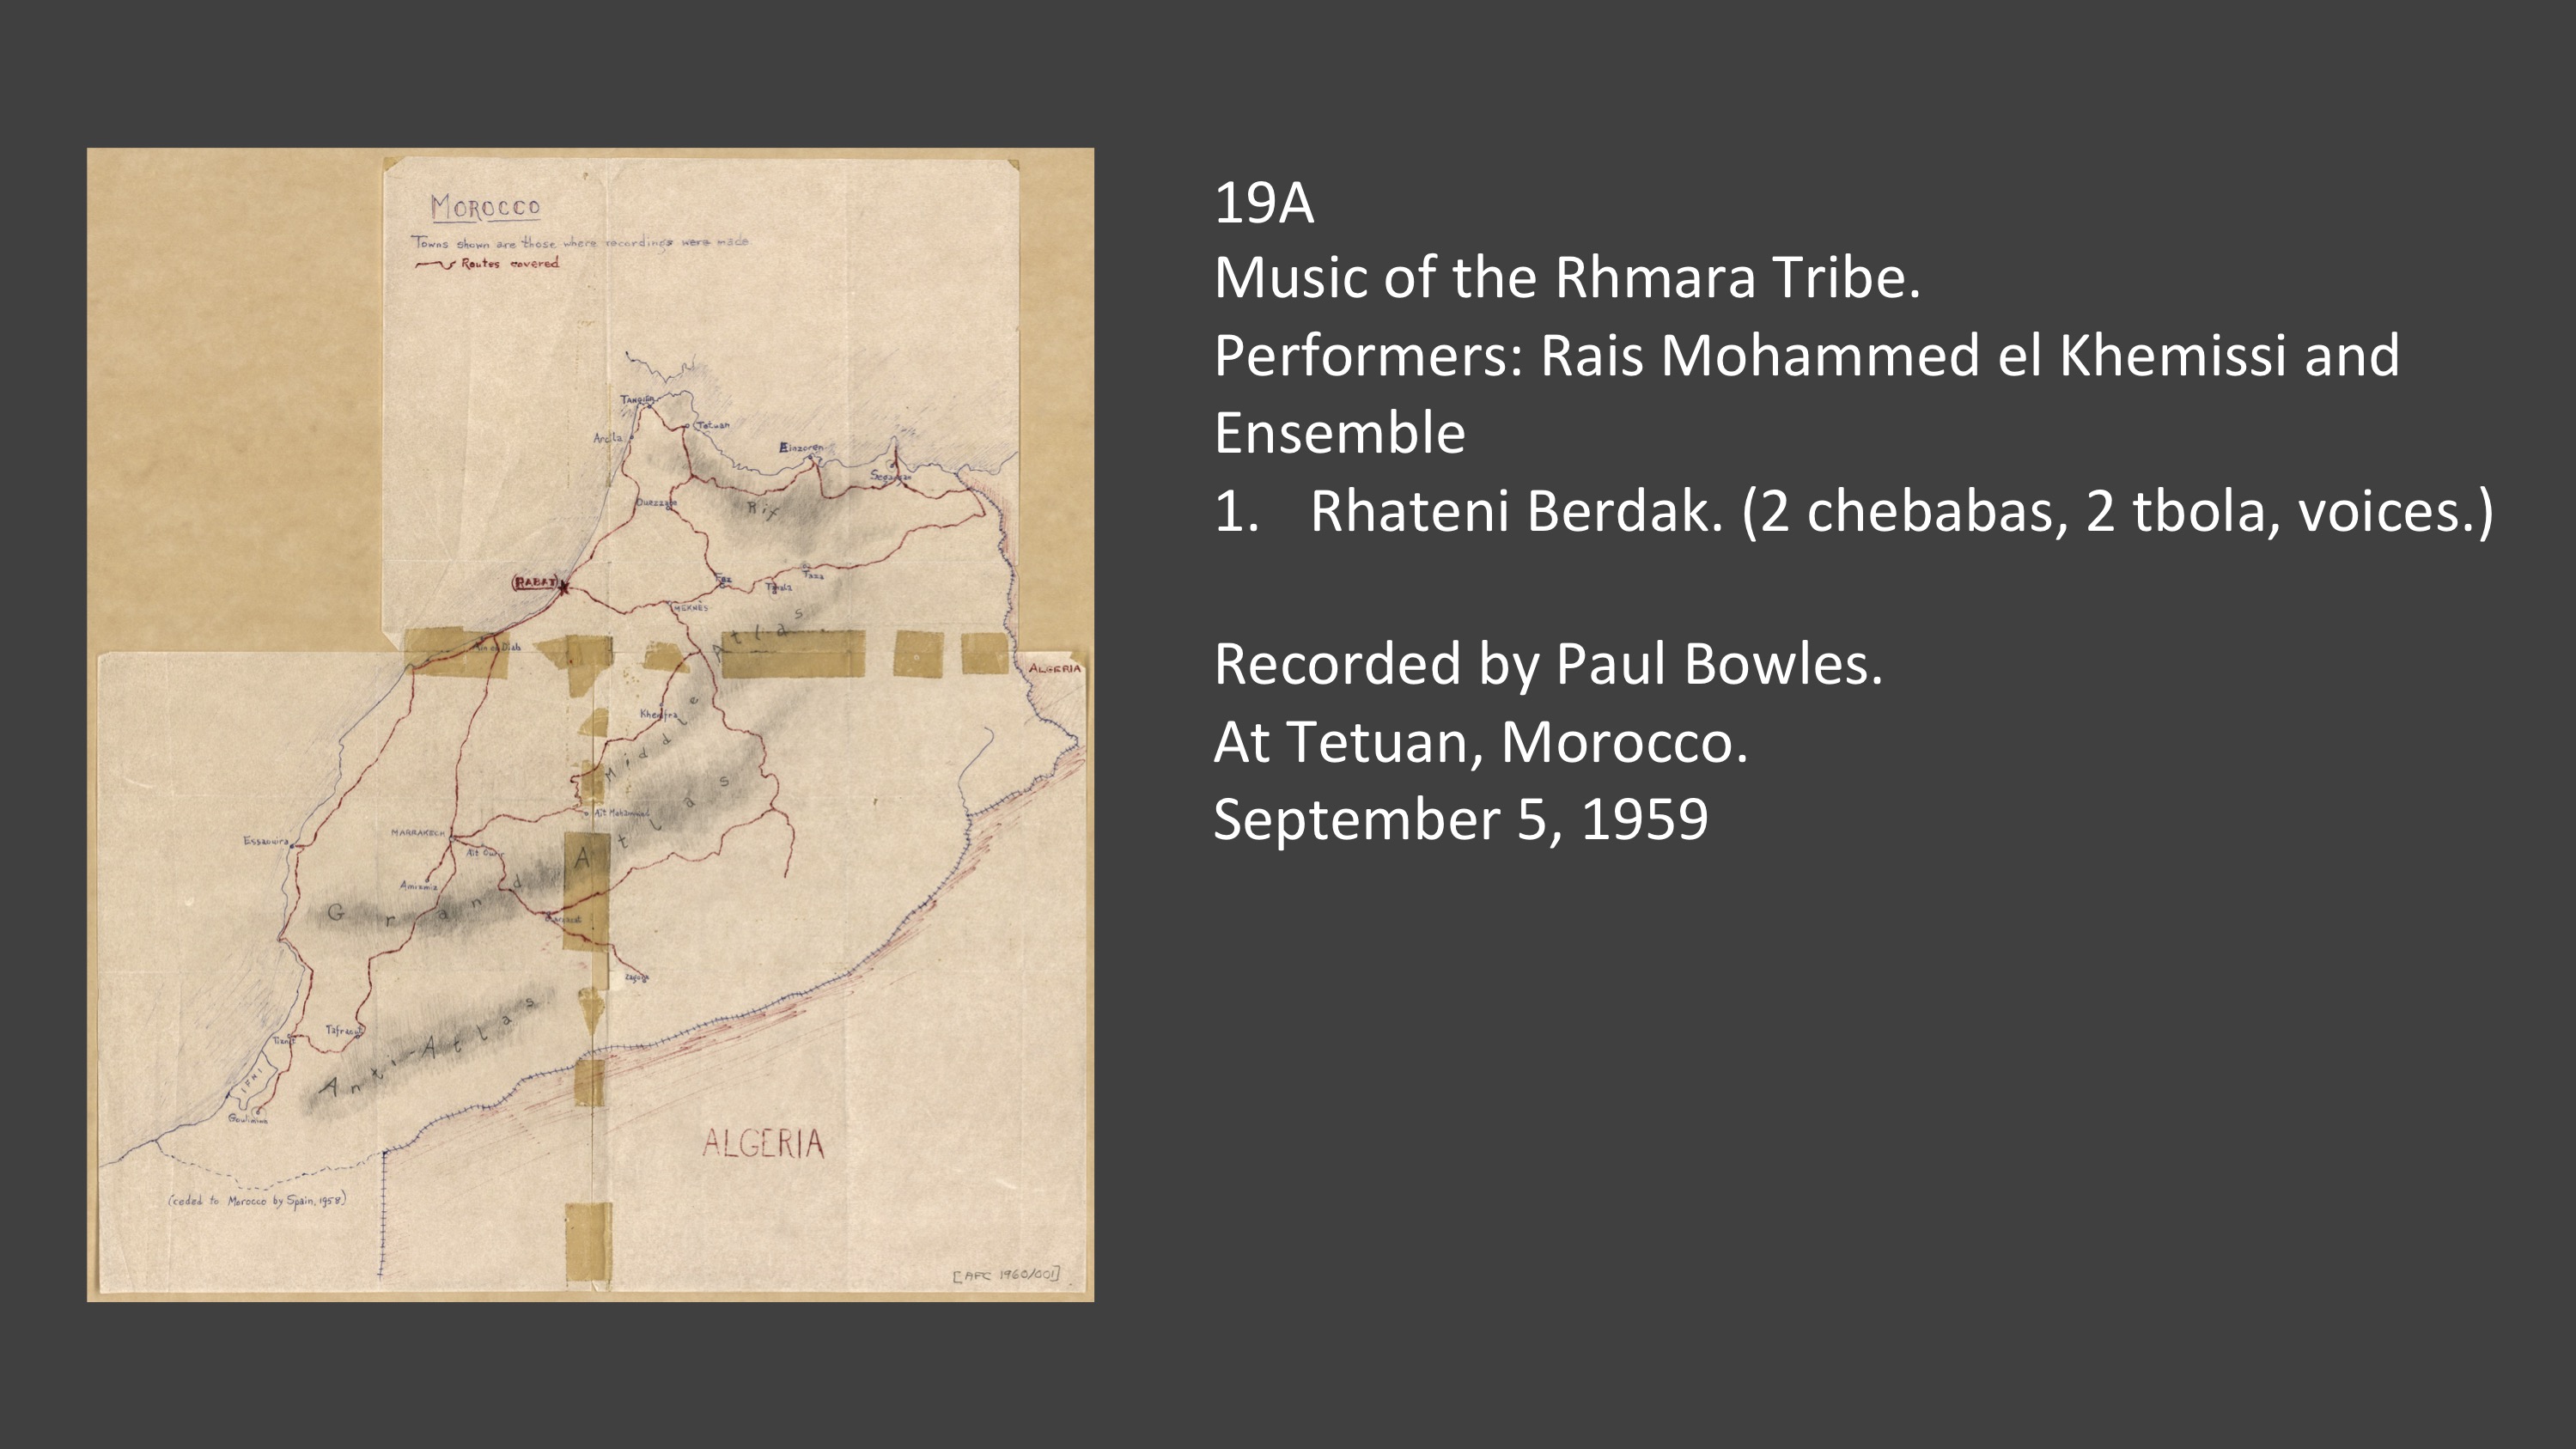 19A 1. Music of the Rhmara Tribe.
Performers: Rais Mohammed el Khemissi and Ensemble
"Rhateni Berdak." (2 chebabas, 2 tbola, voices.)

